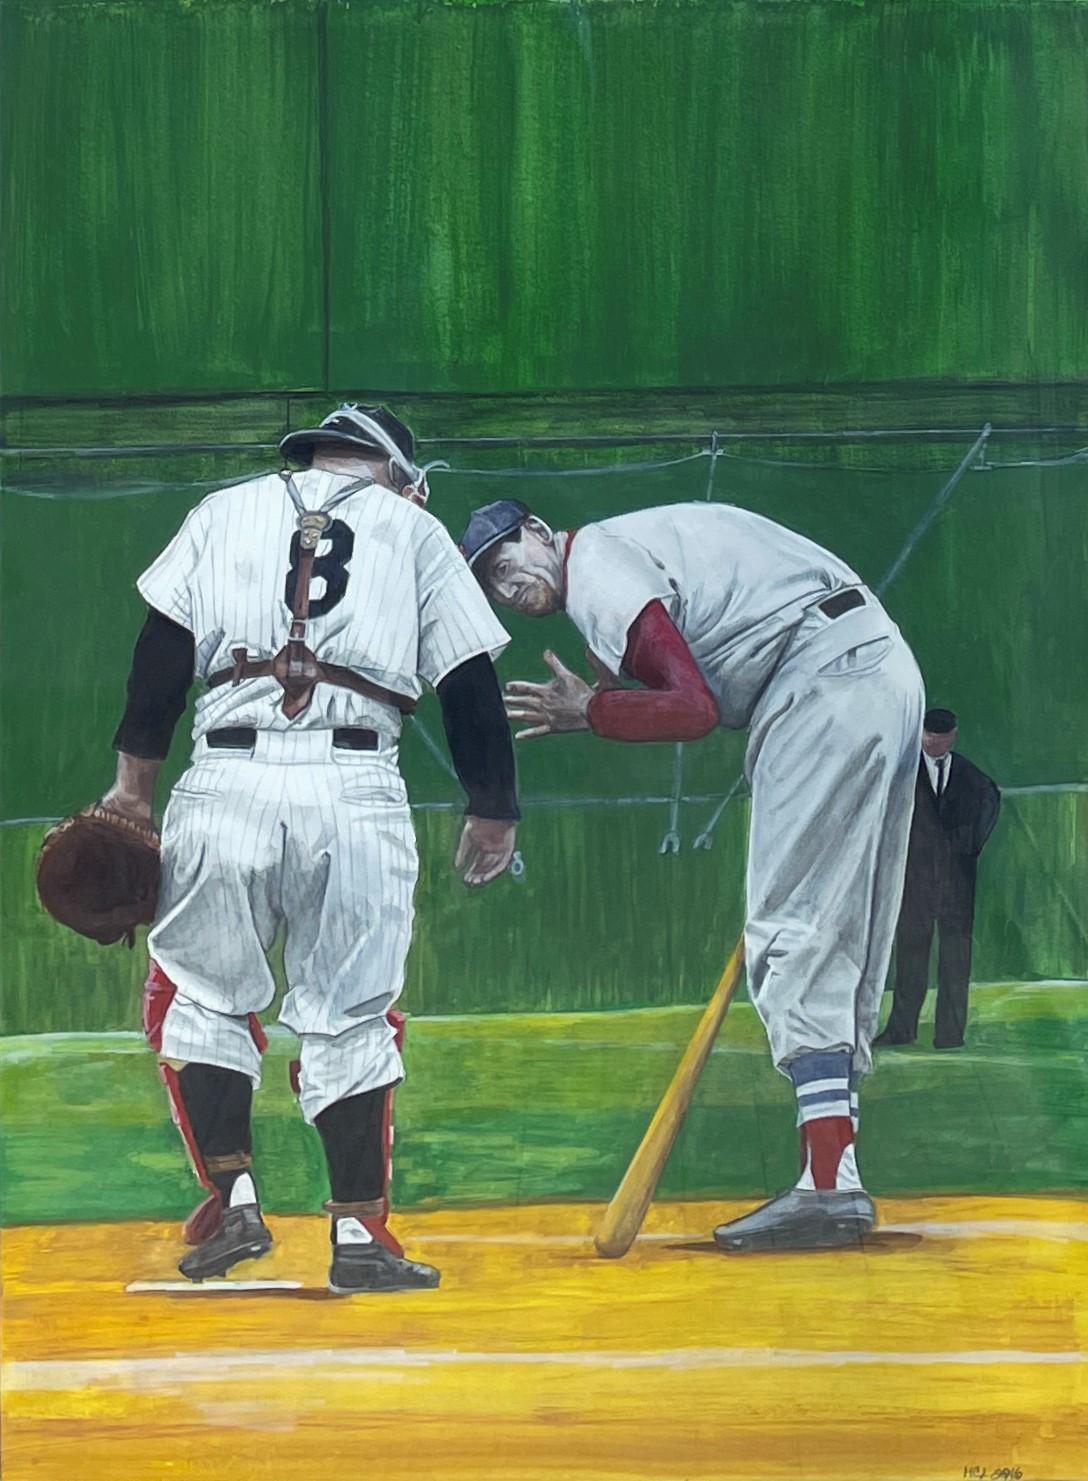 Yogi et Ted - Baseball Greats Yogi Berra et Ted Williams, aquarelle sur papier